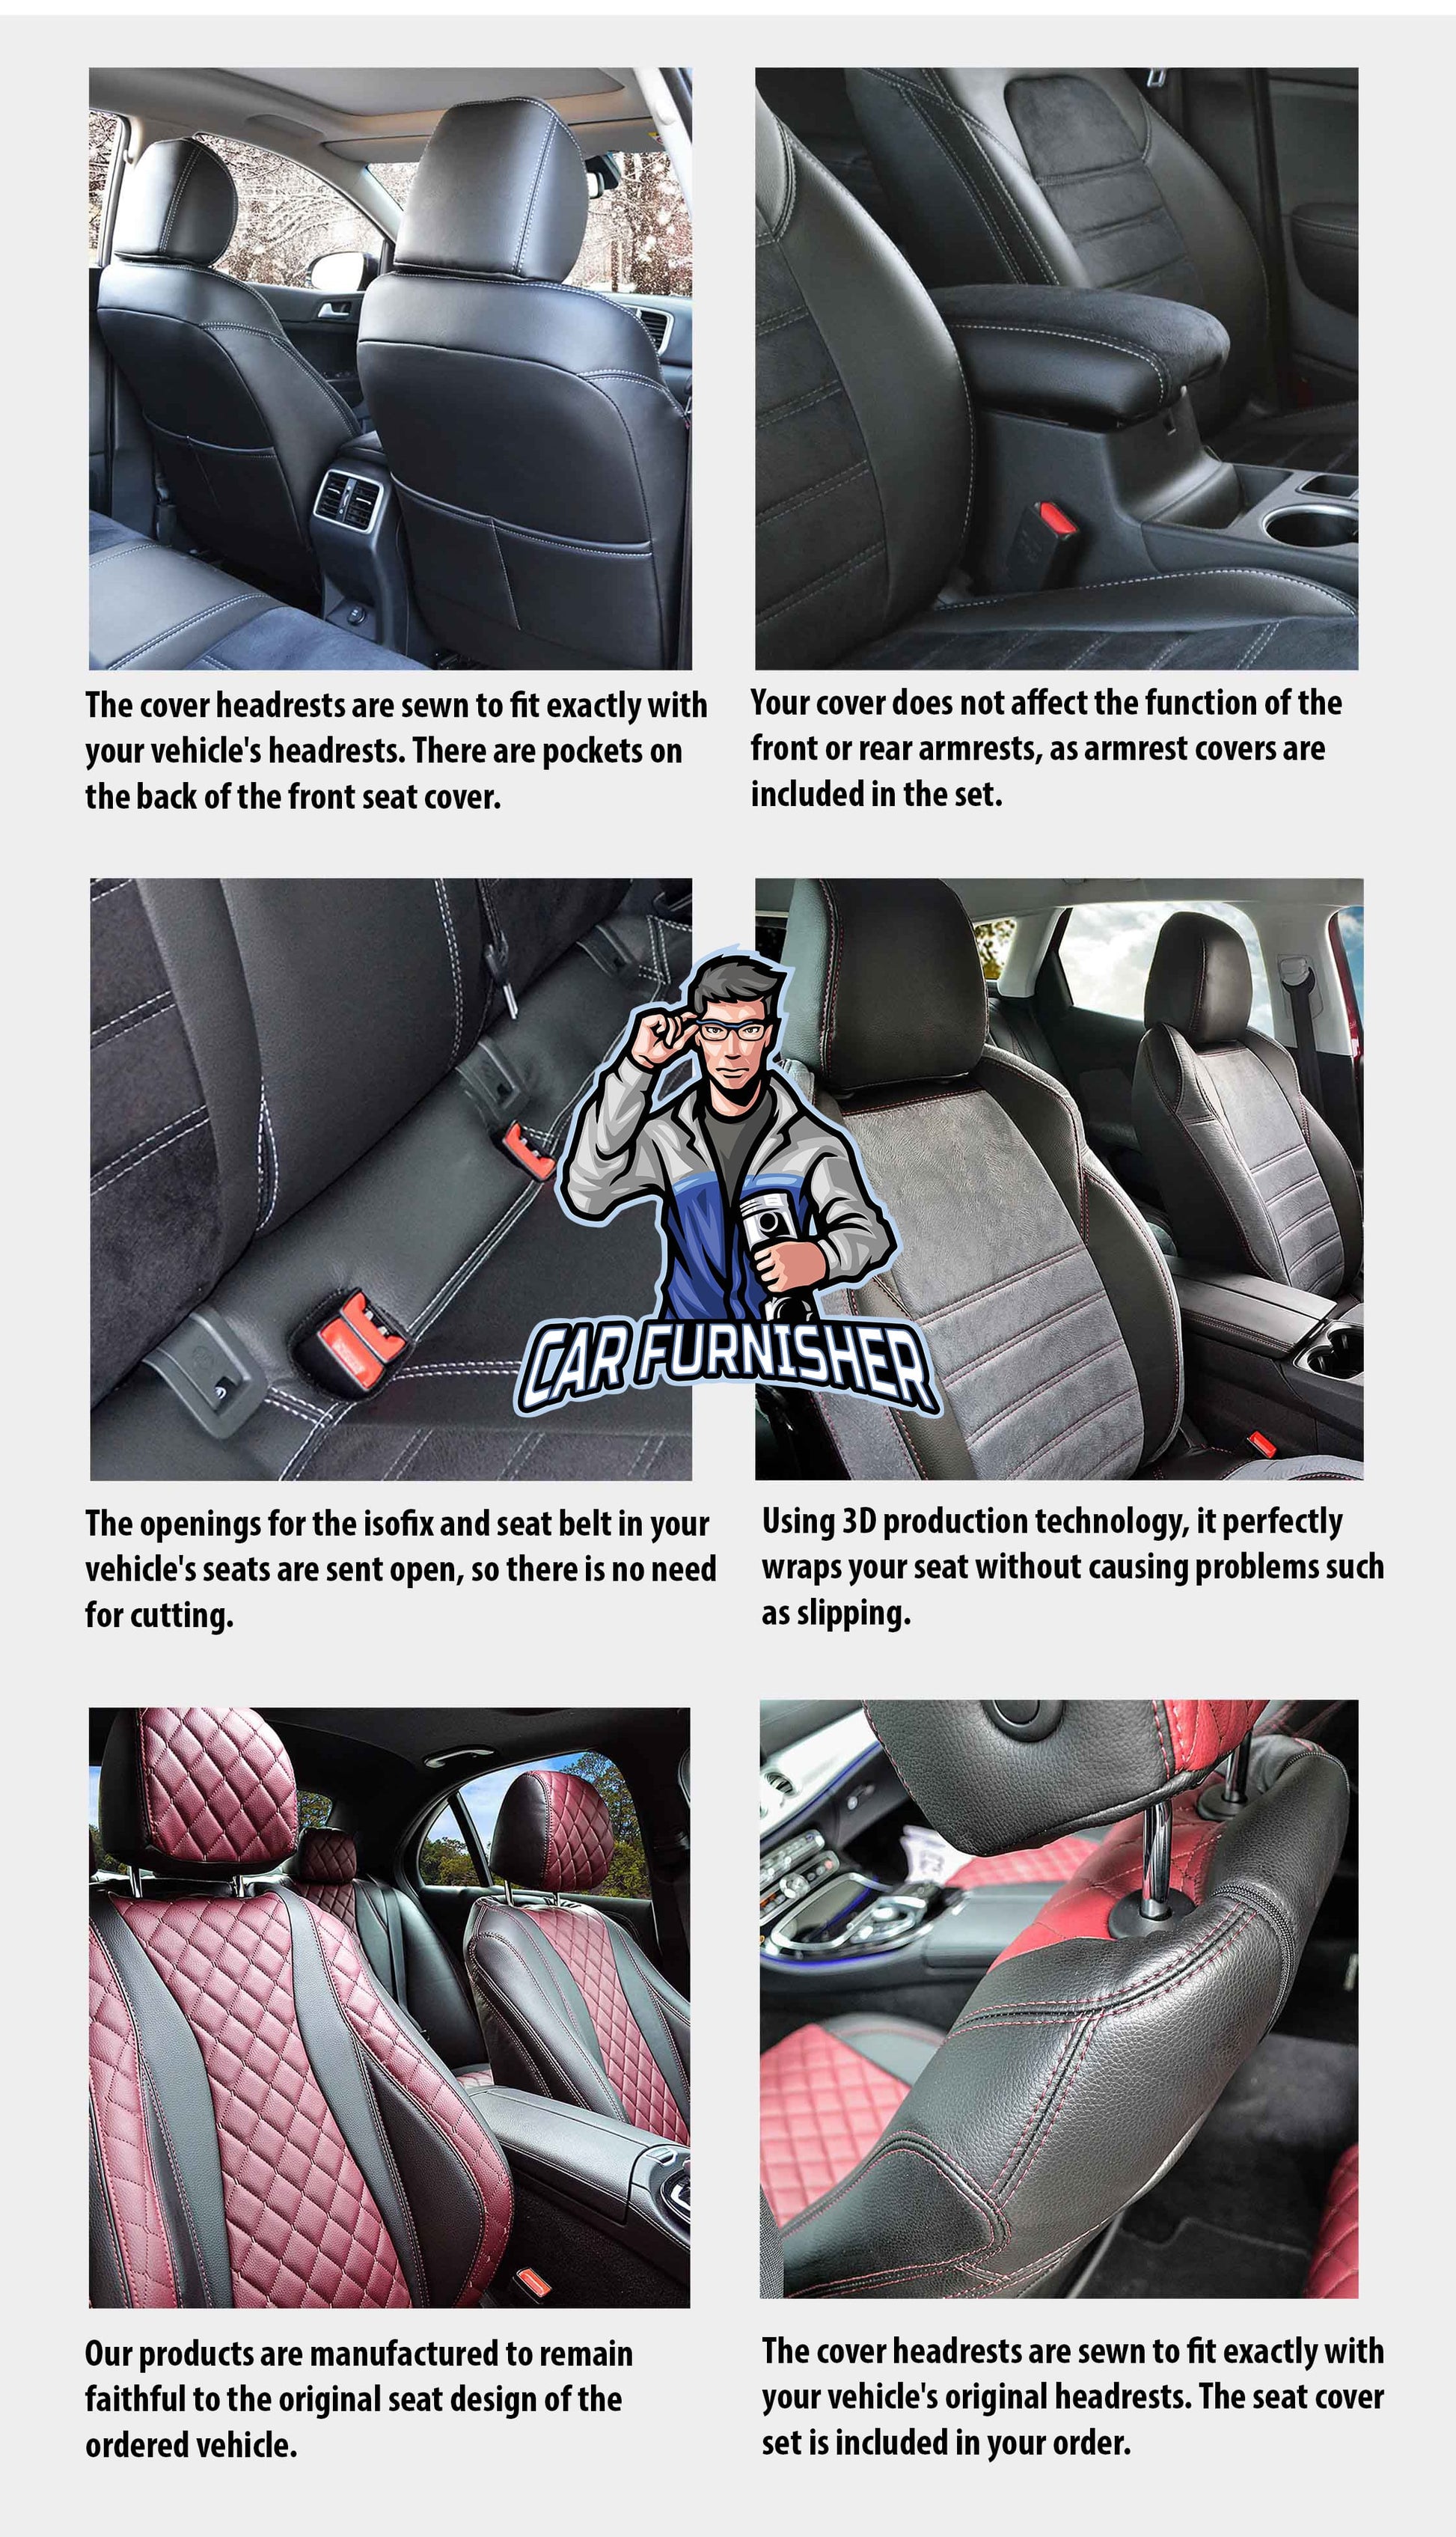 Suzuki Baleno Seat Covers Madrid Leather Design Dark Gray Leather